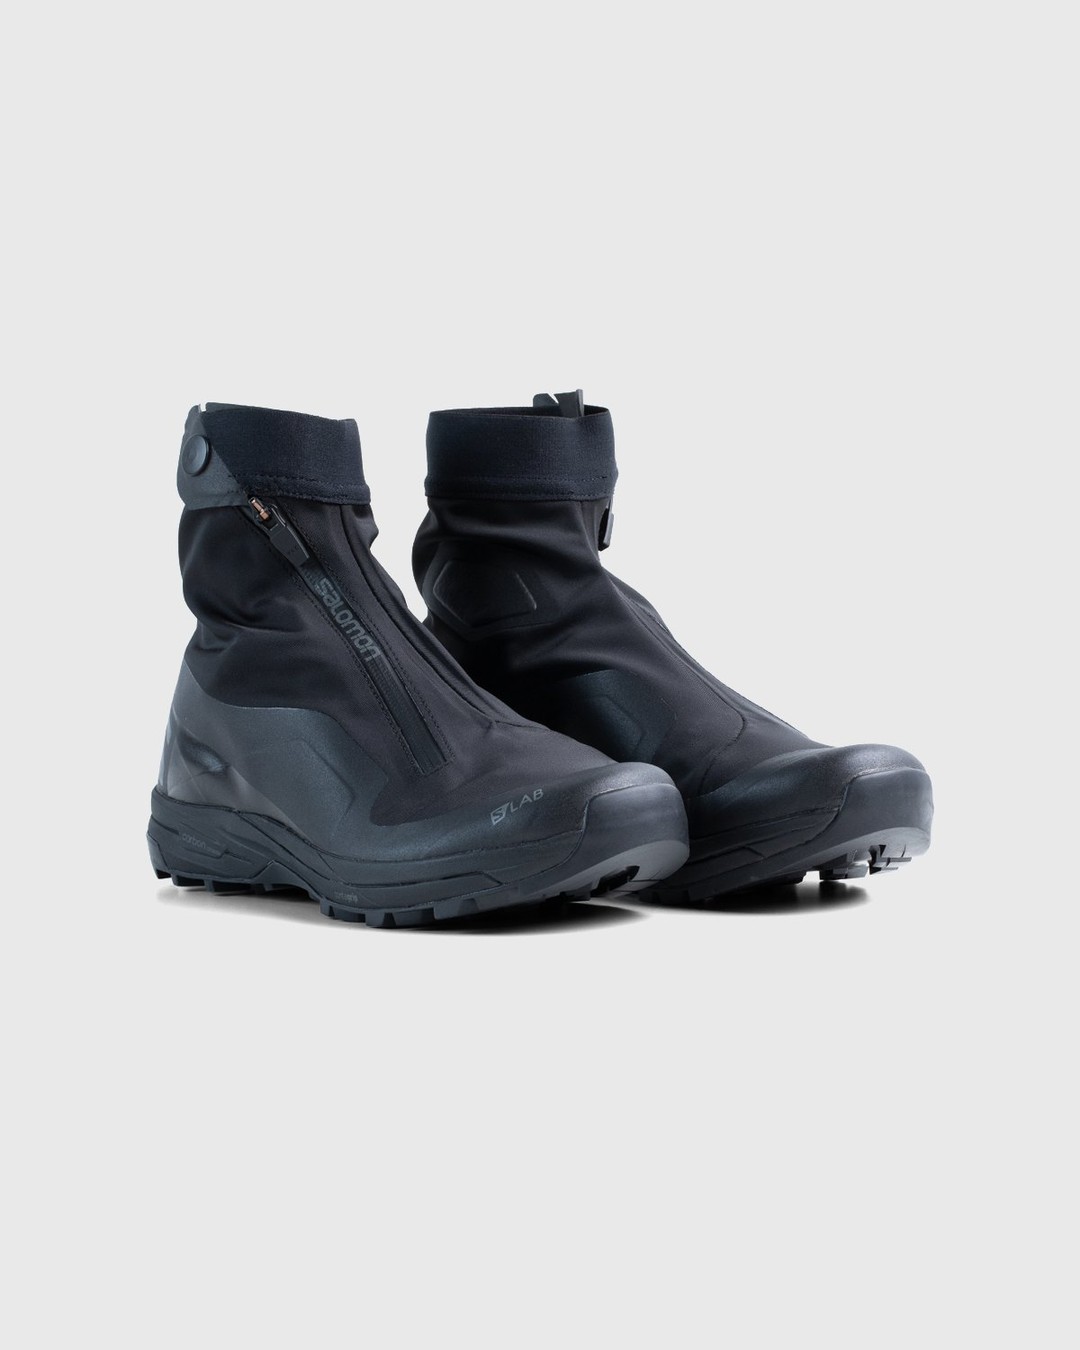 Salomon – S/Lab XA-Alpine 2 Limited Edition Black - Hiking Boots - Black - Image 2